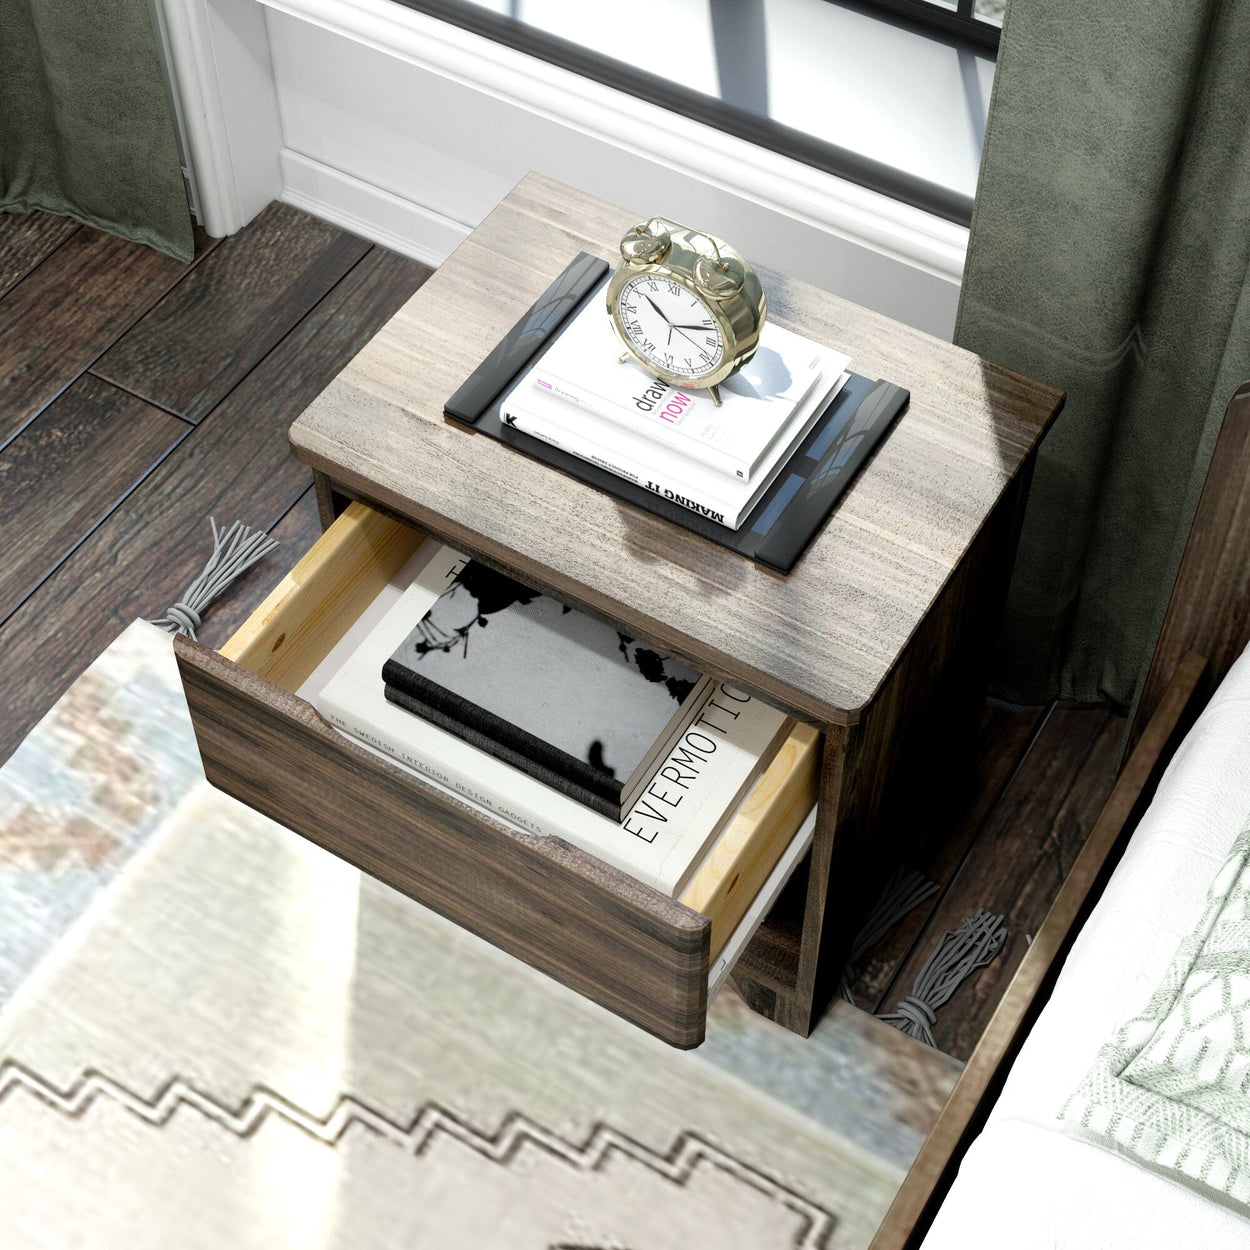 190001-181 : Furniture K/D 1 Drawer Nightstand w/ metal drawer glides (22"L x 15.75"W x 23.75"H), Barnwood Brown